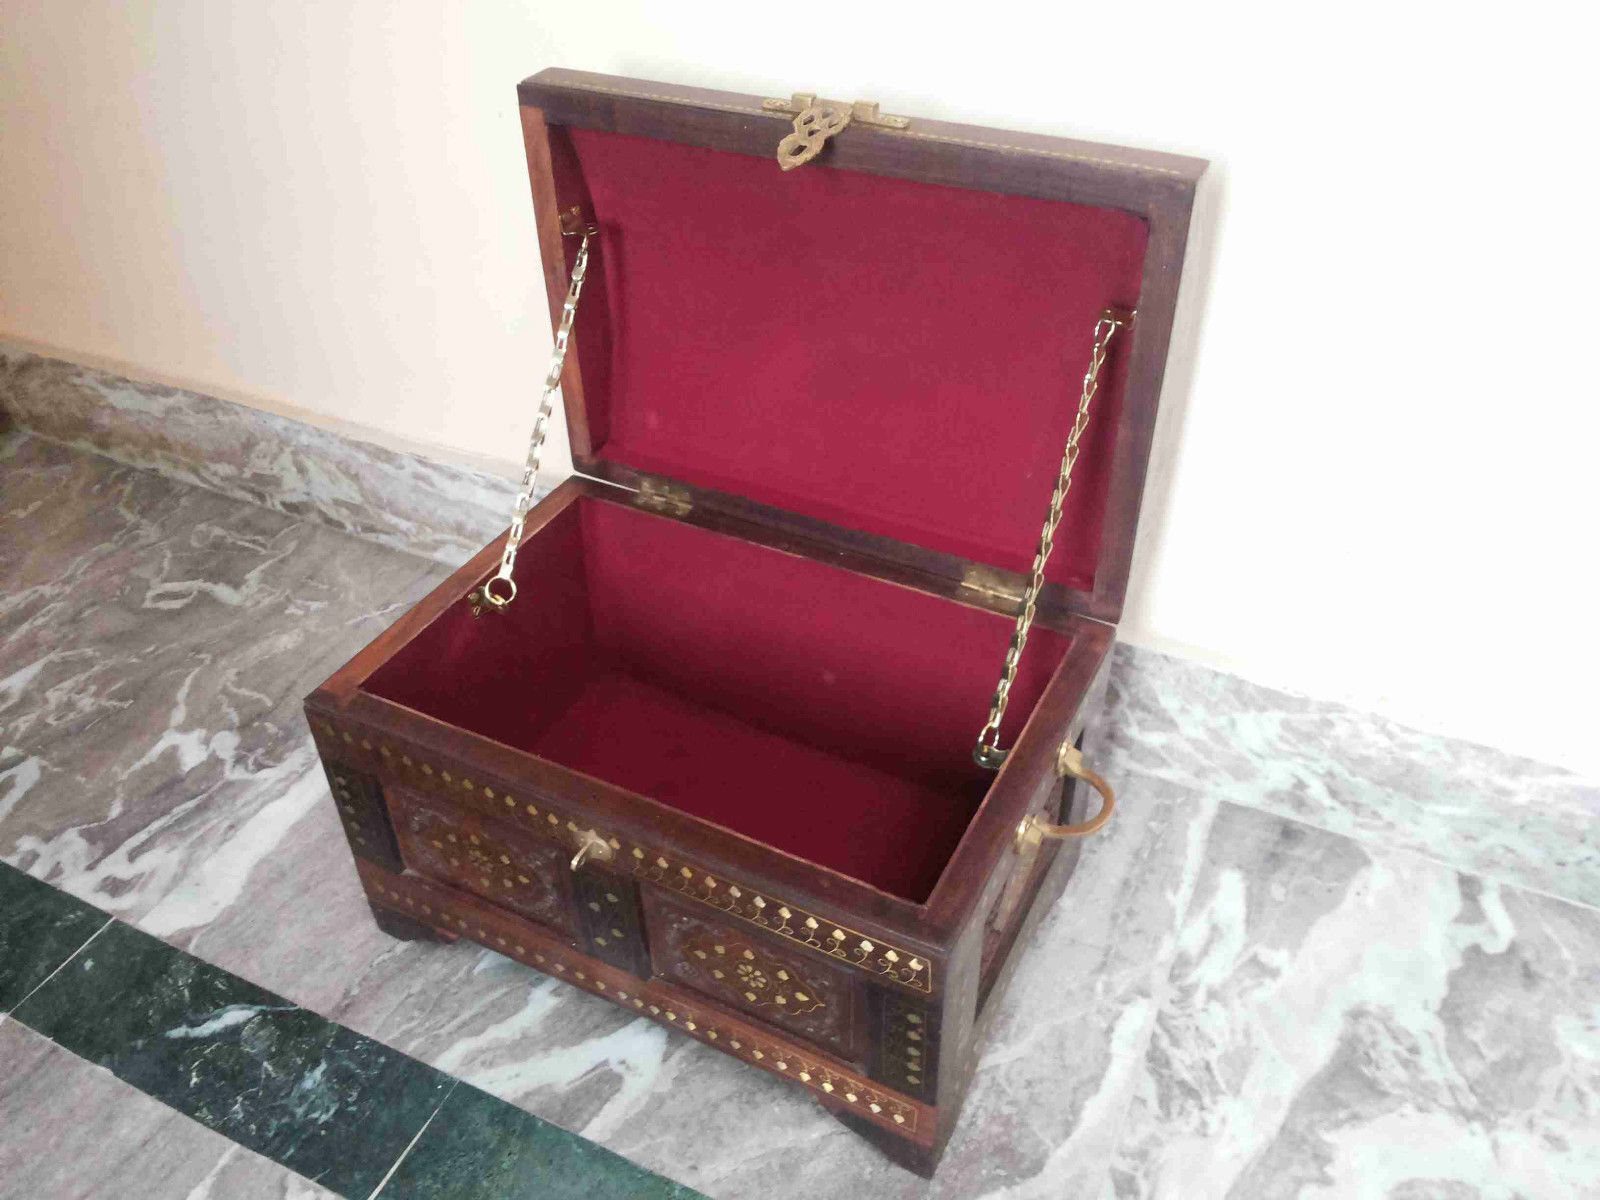 Wooden Box Treasure Pirate Collectible Maritime Home Decorative Gift